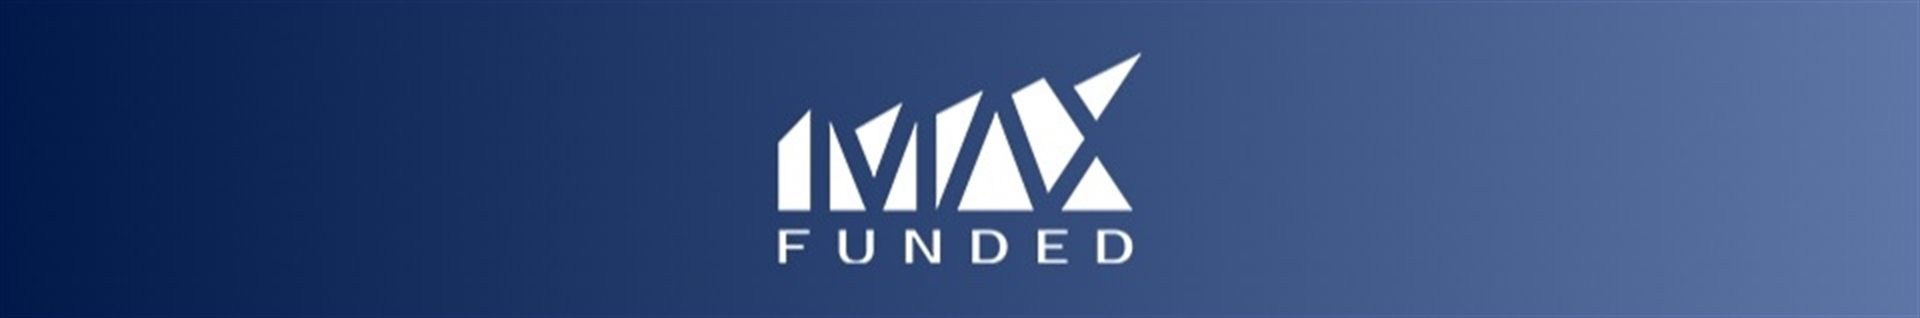 fundedmax